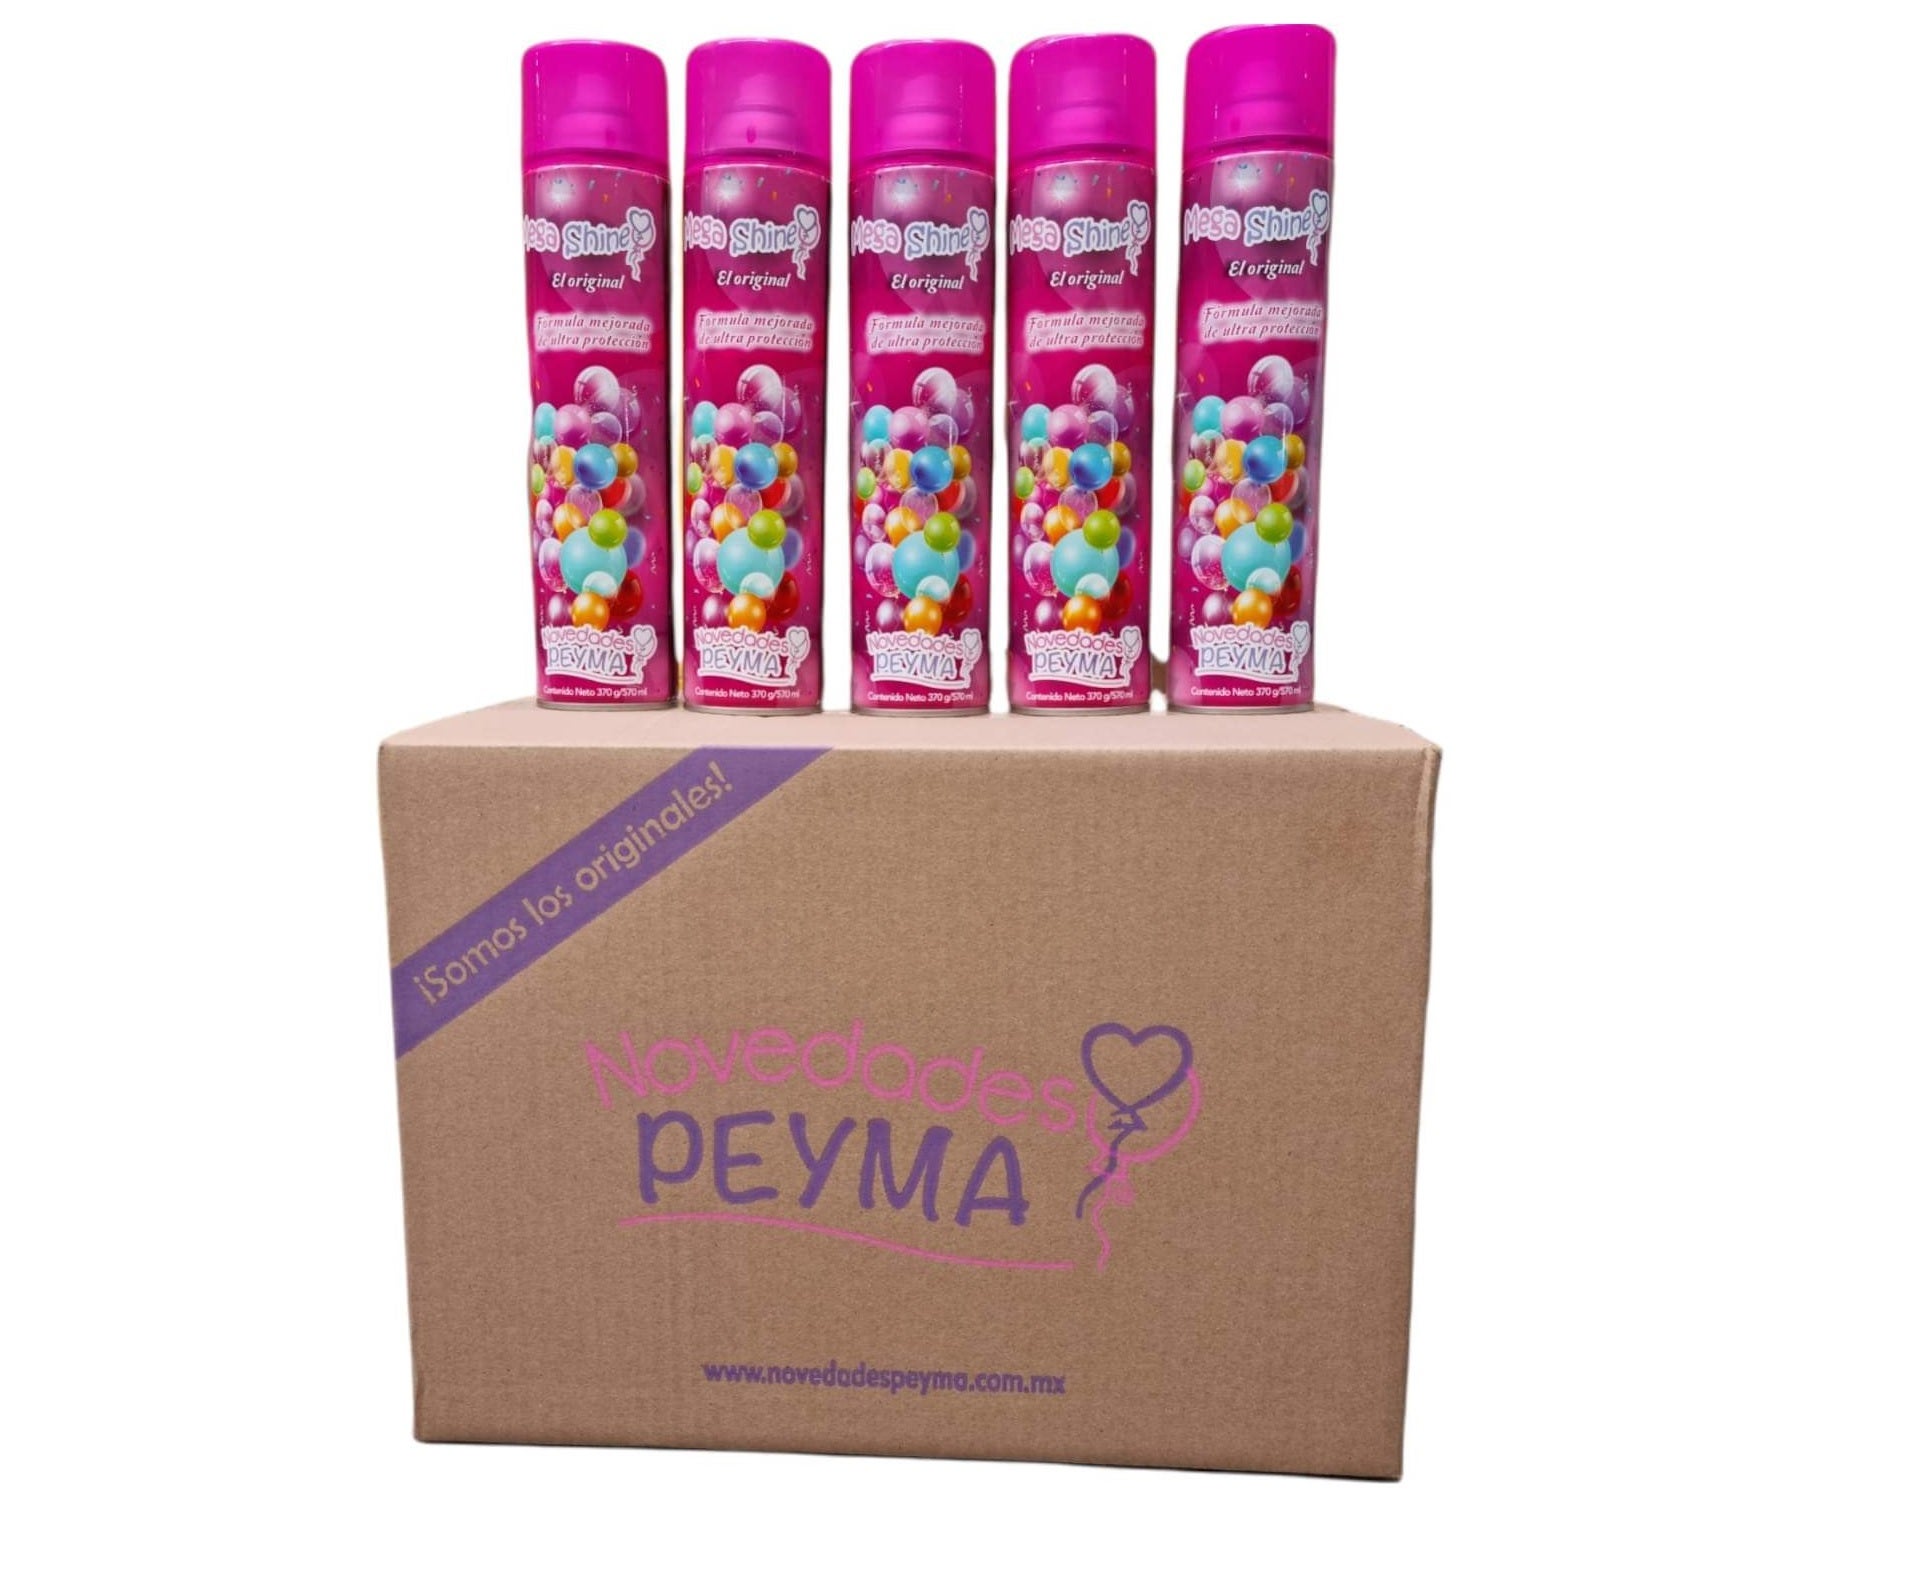 Mega Shine Spray - Novedades Peyma (1 count - 570ml)